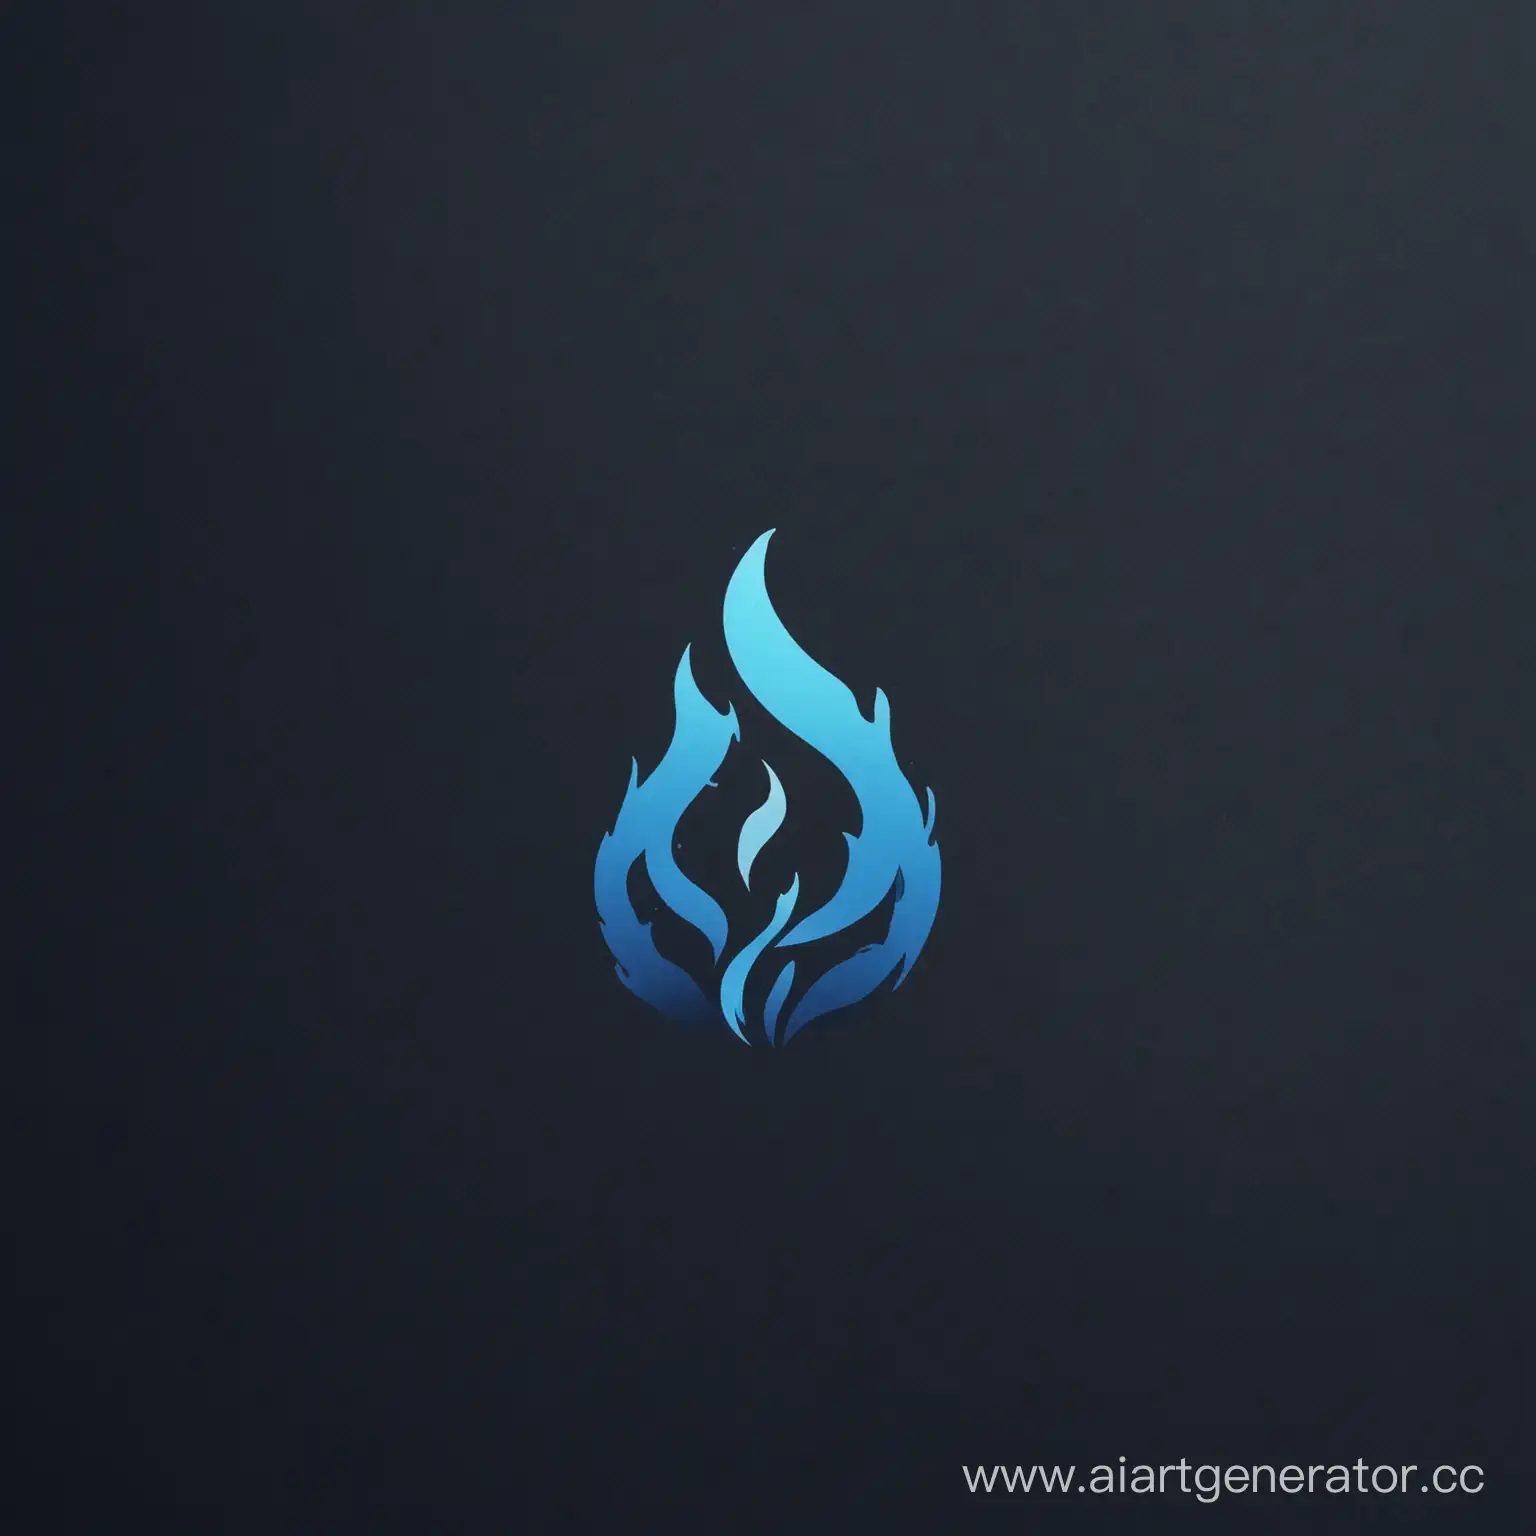 Логотип огня, минимализм, однотонный, синий цвет огня